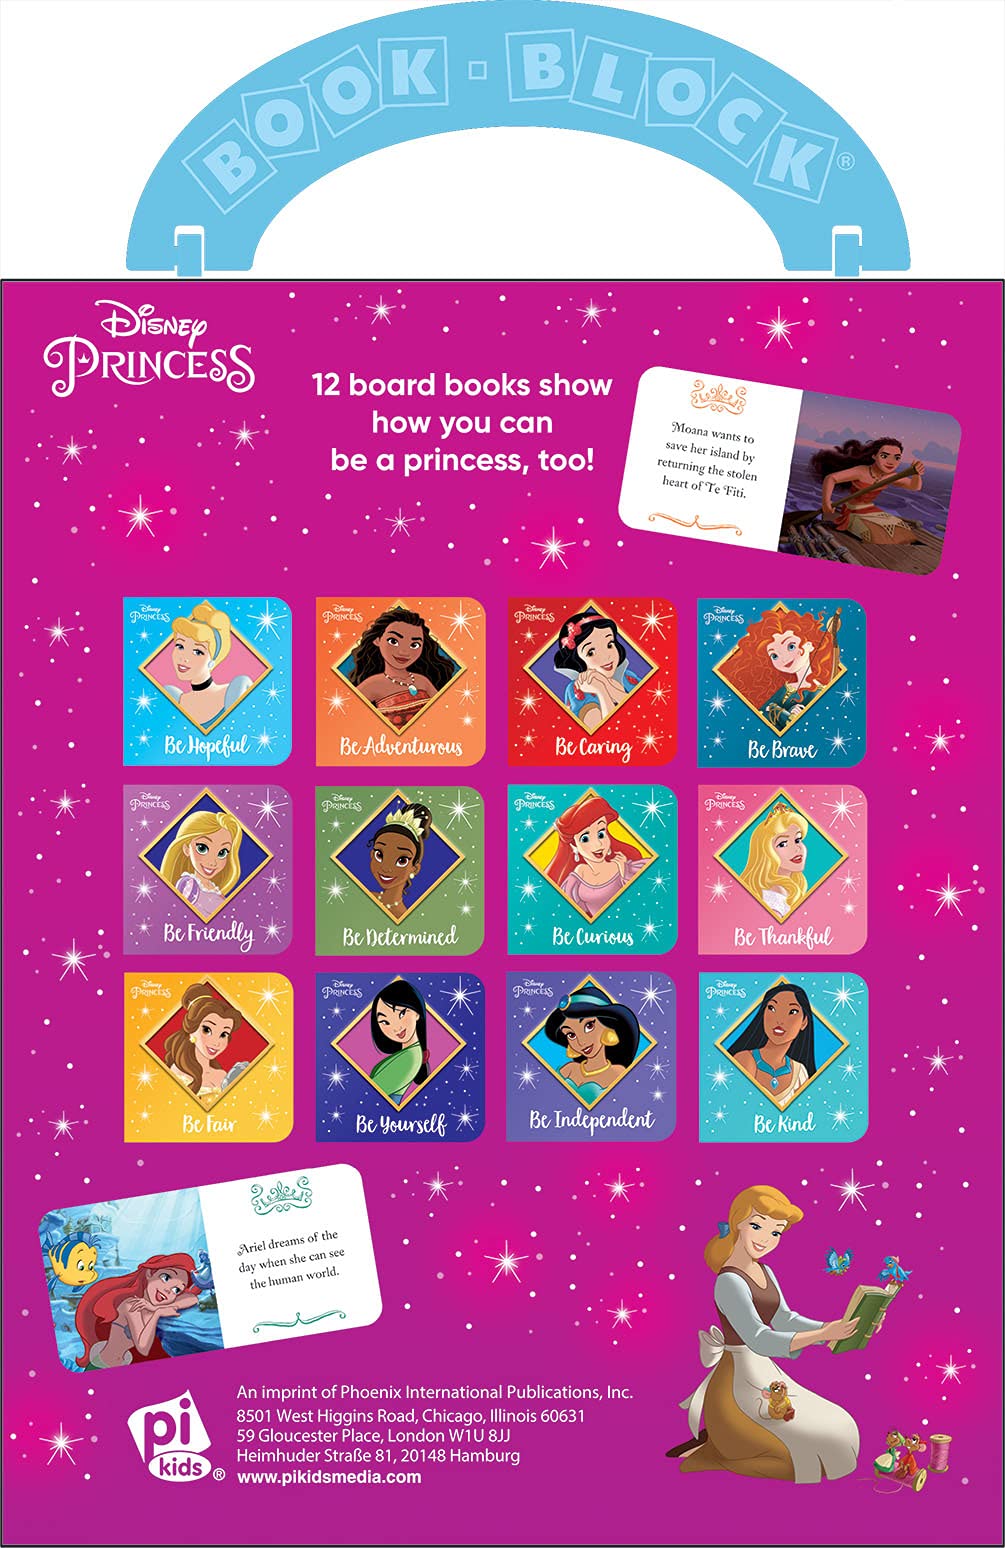 Disney Princess - I Can Be Princess My First Library Board Book Block 12-Book Set